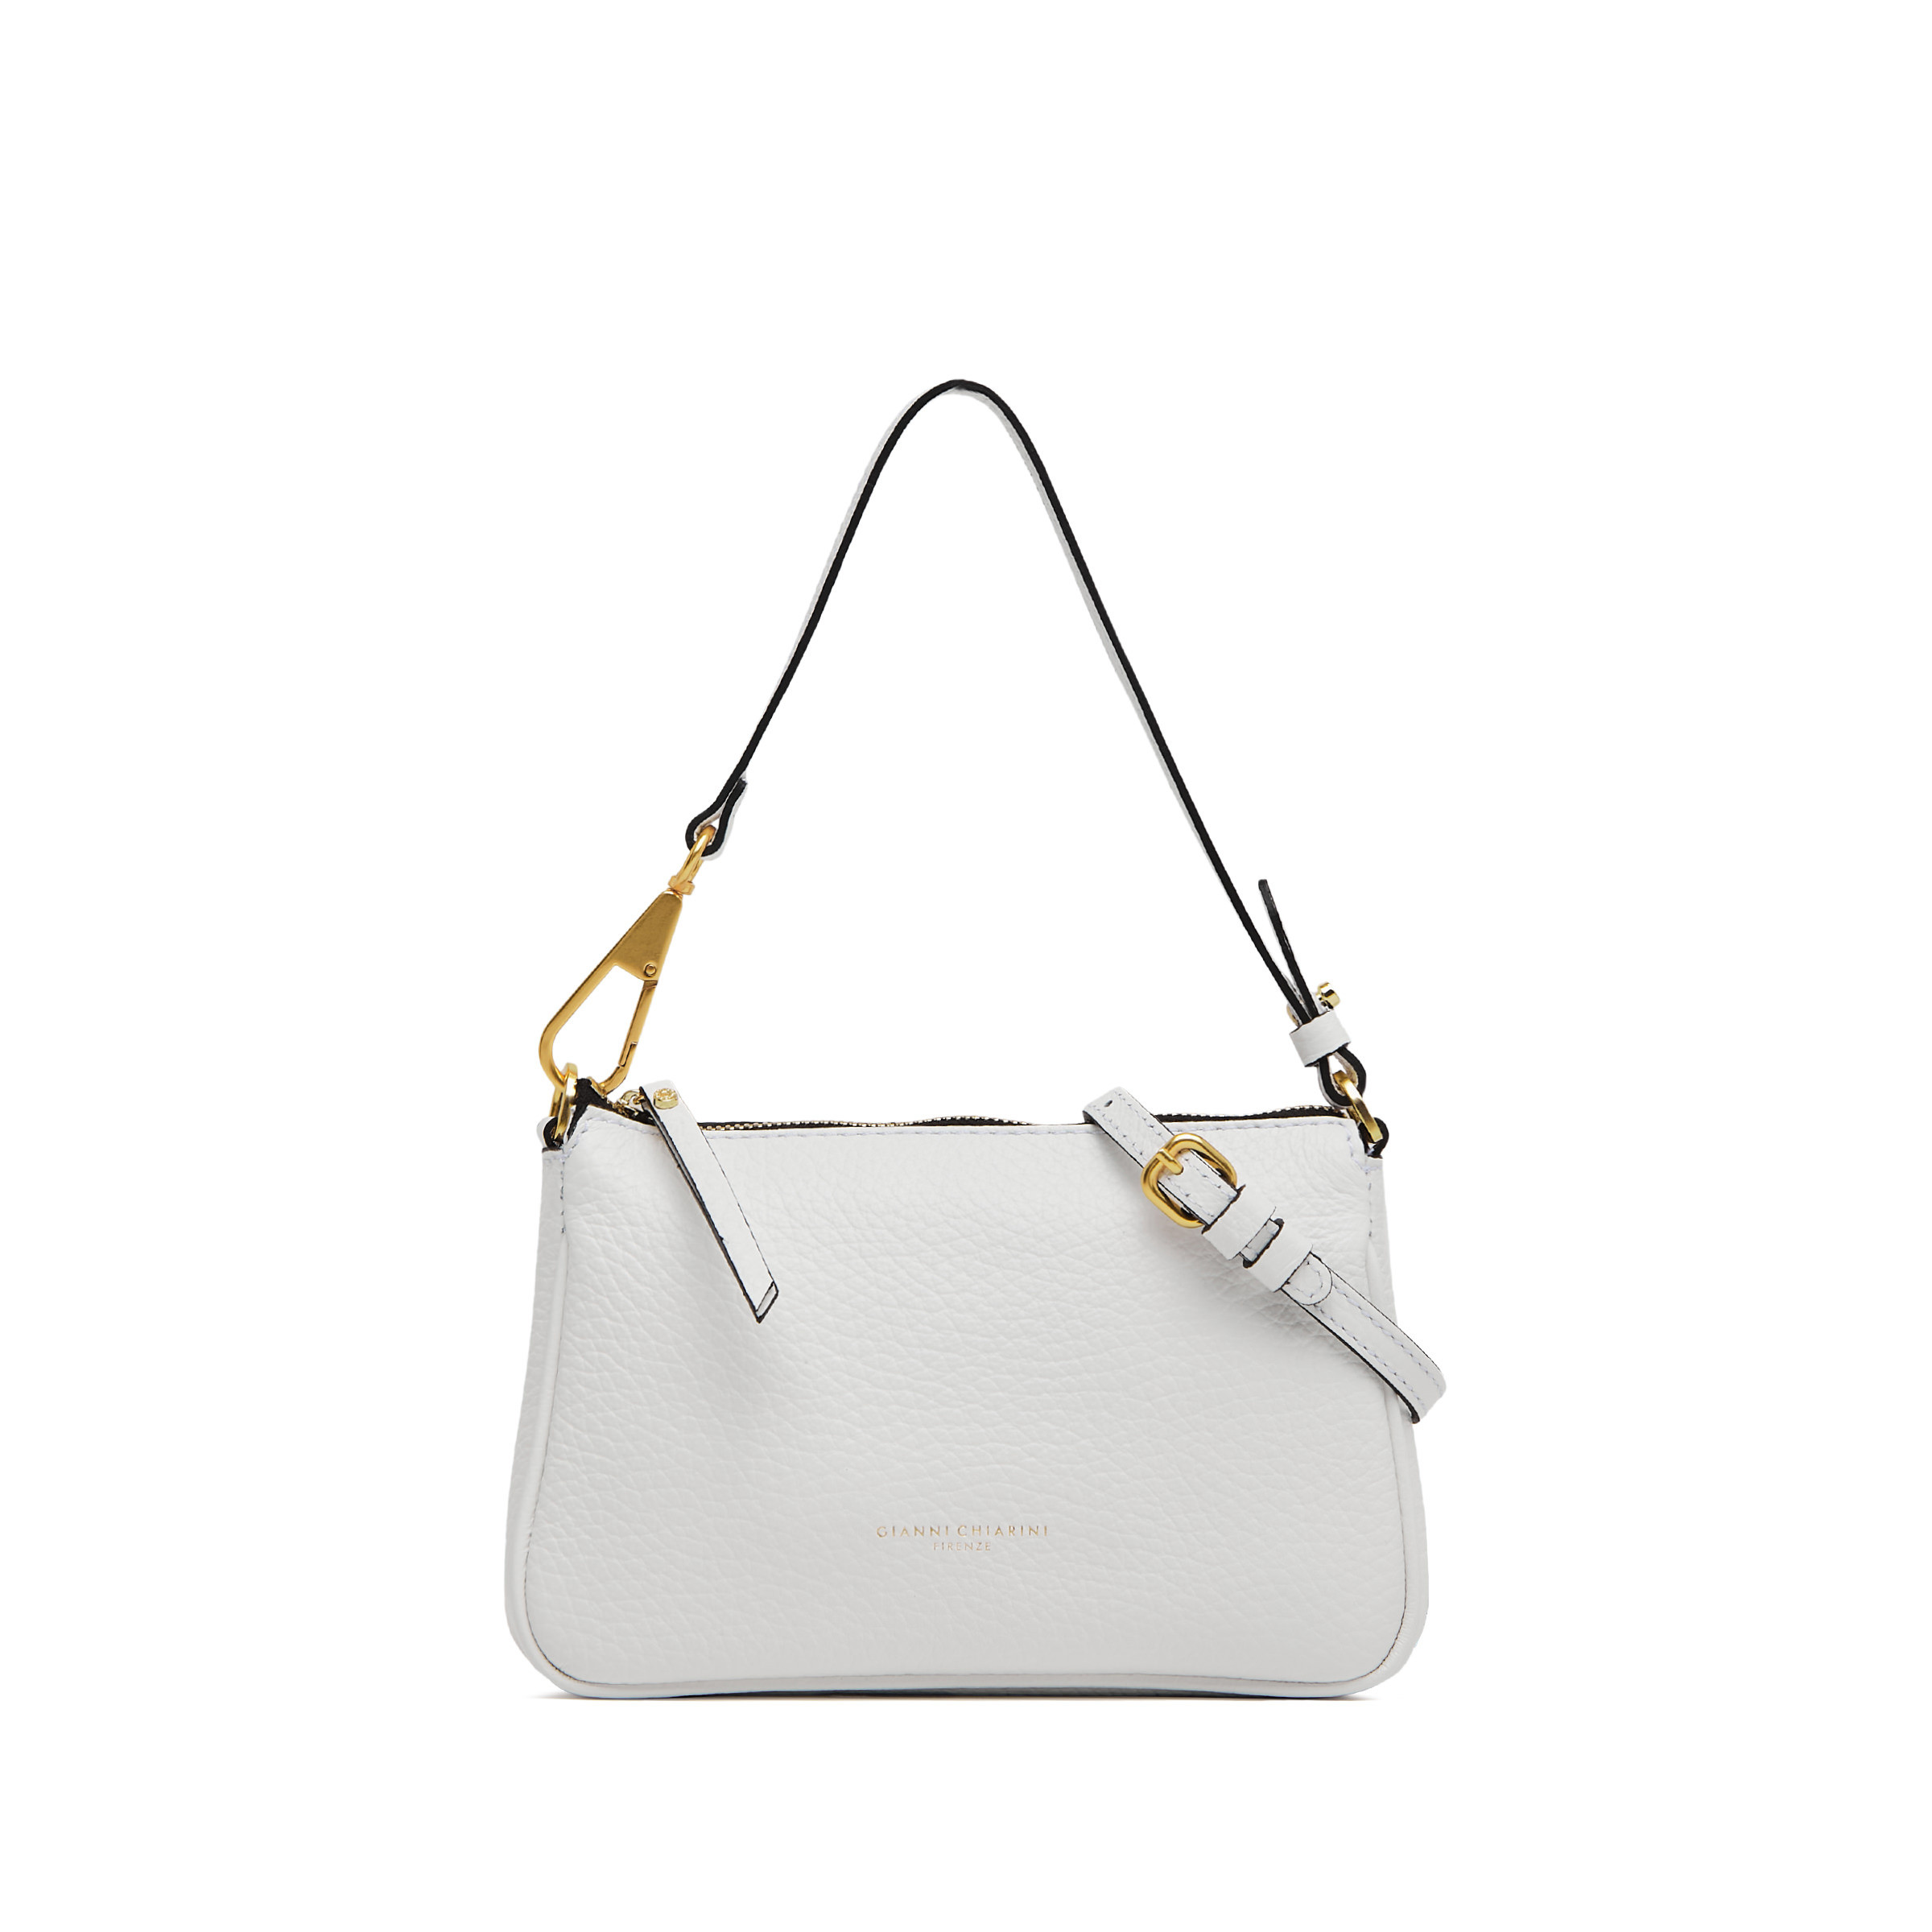 Gianni Chiarini - Brooke bag in leather, White, large image number 0